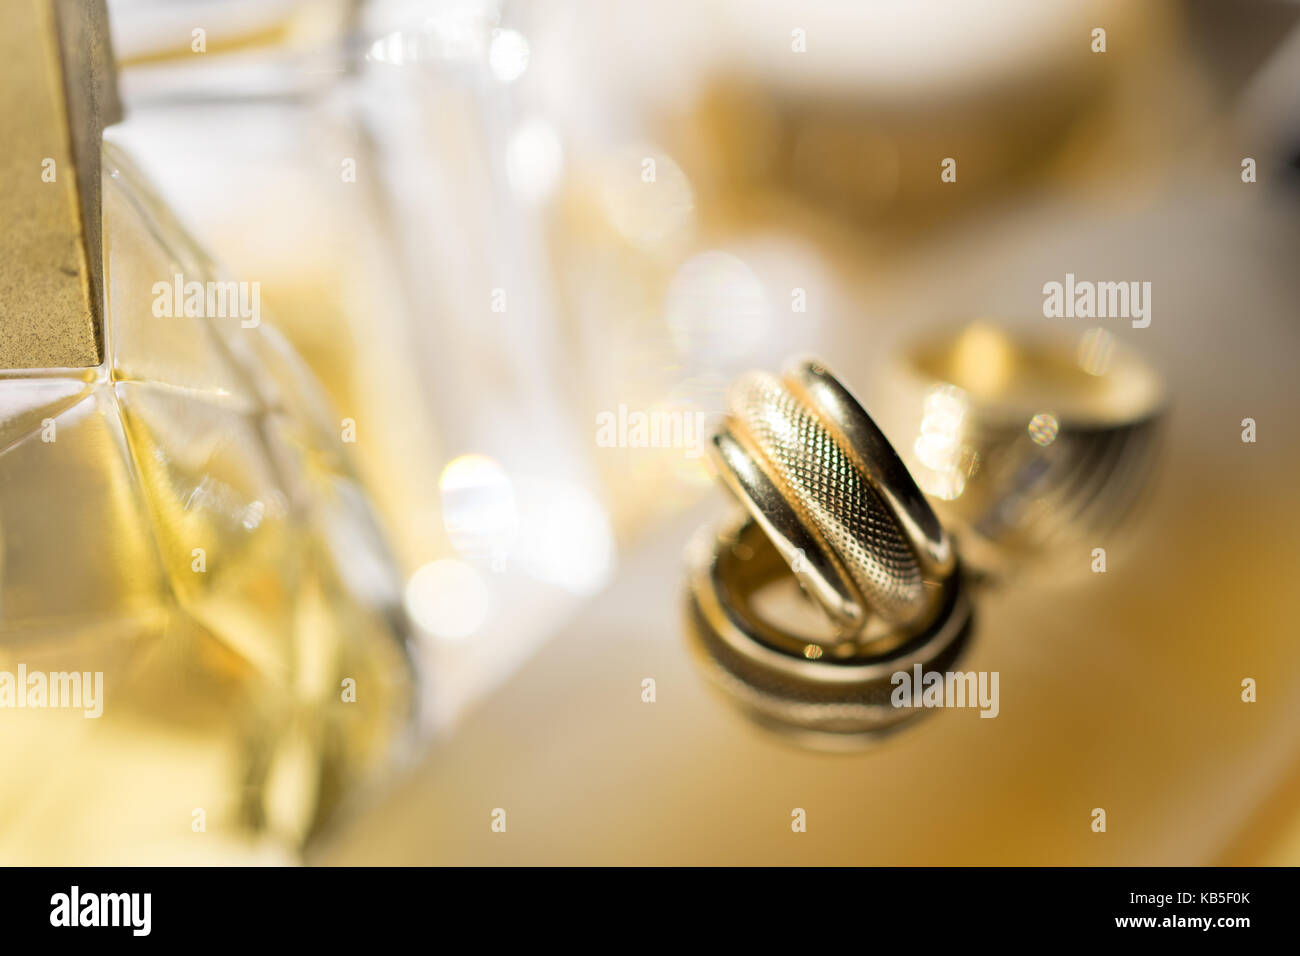 precious family jewellery on glass background Stock Photo